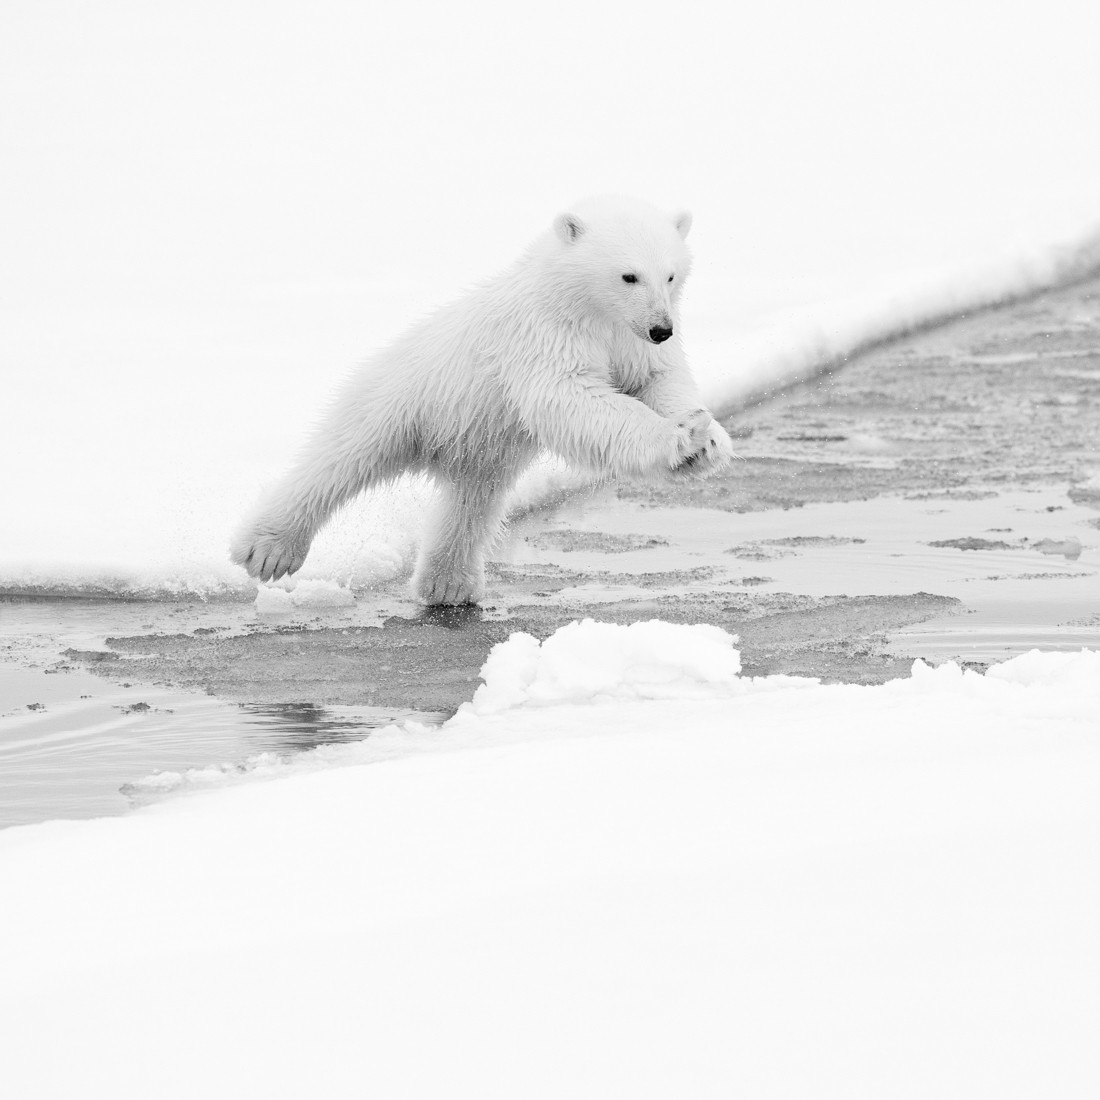 Арктика жизнь белого медведя. Звери Арктики. Белый медведь. Белые медведи в Арктике. Животные Арктики белый медведь.